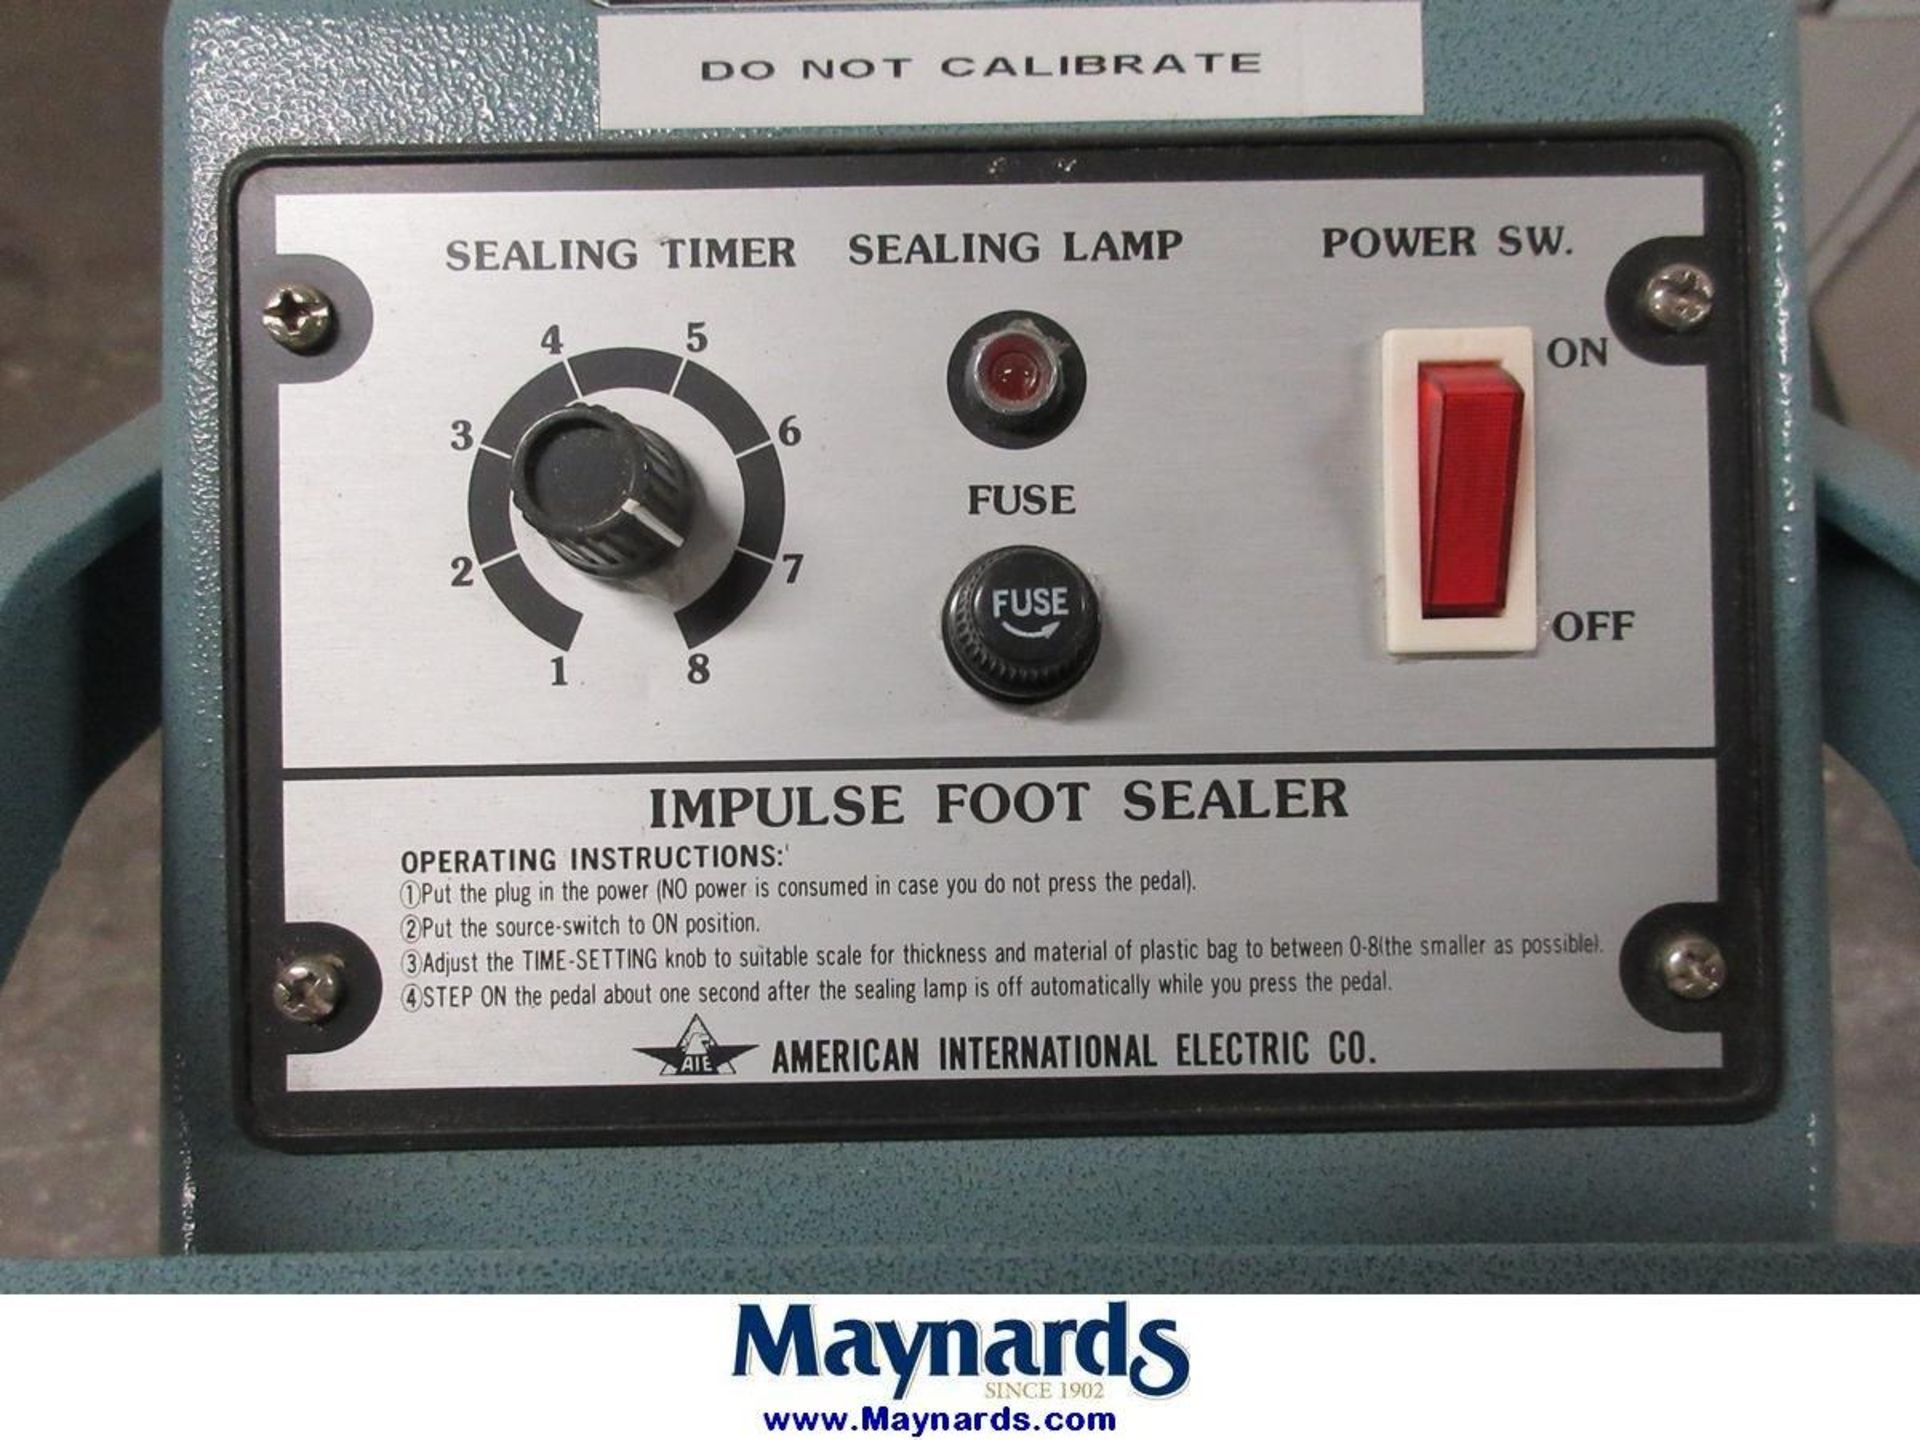 American International Electric Co AIE-600Fl 24" Impulse Foot Sealer - Image 5 of 6